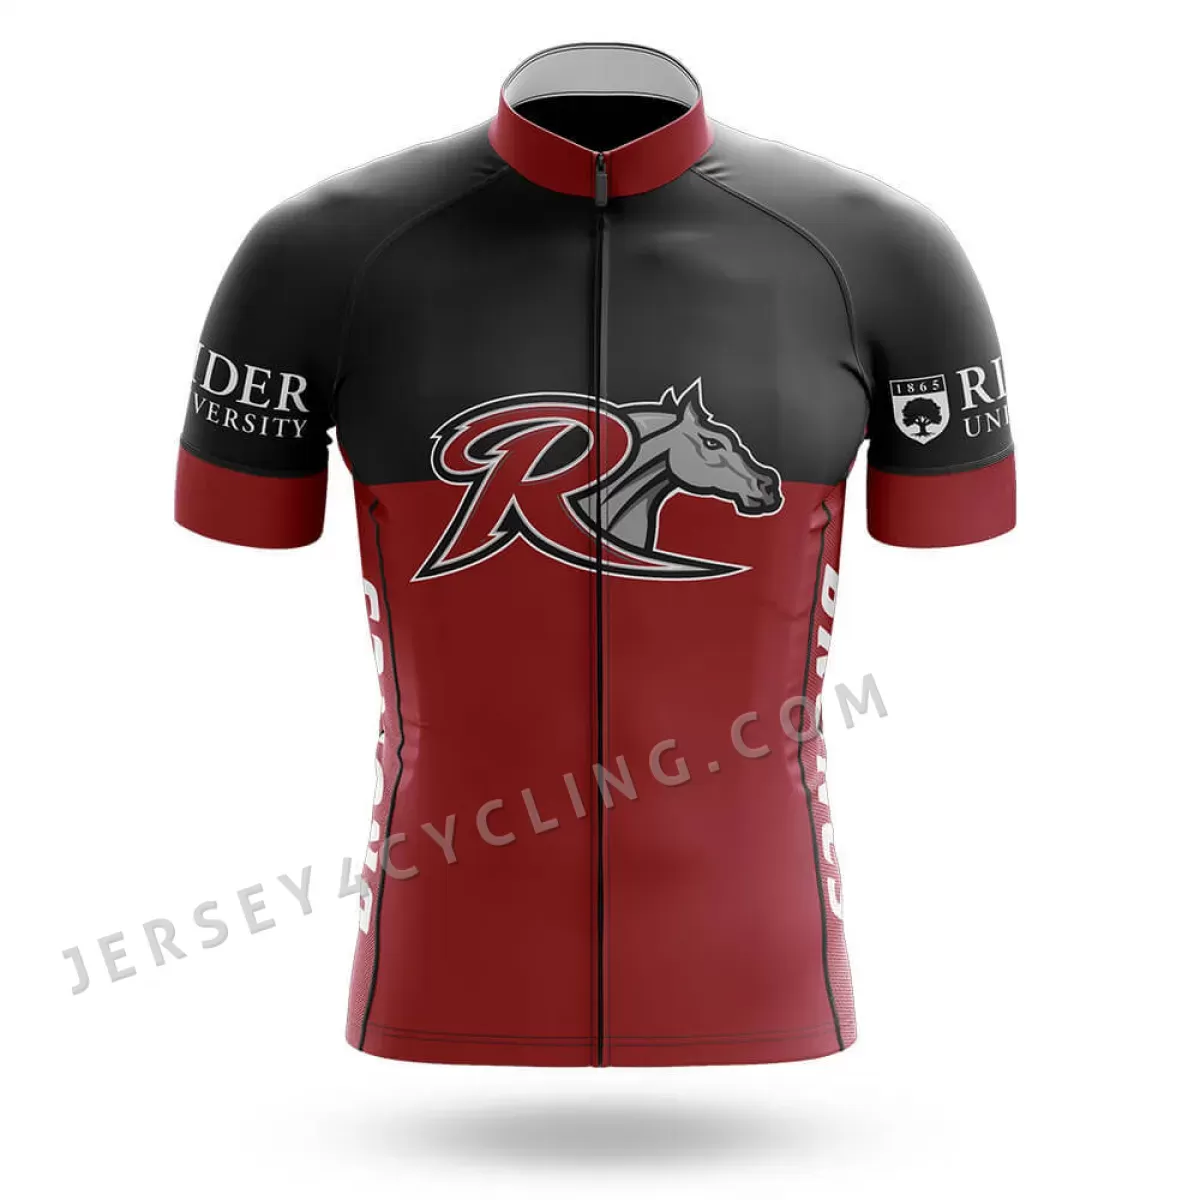 Rider University Cycling Jersey Ver.2 Restock